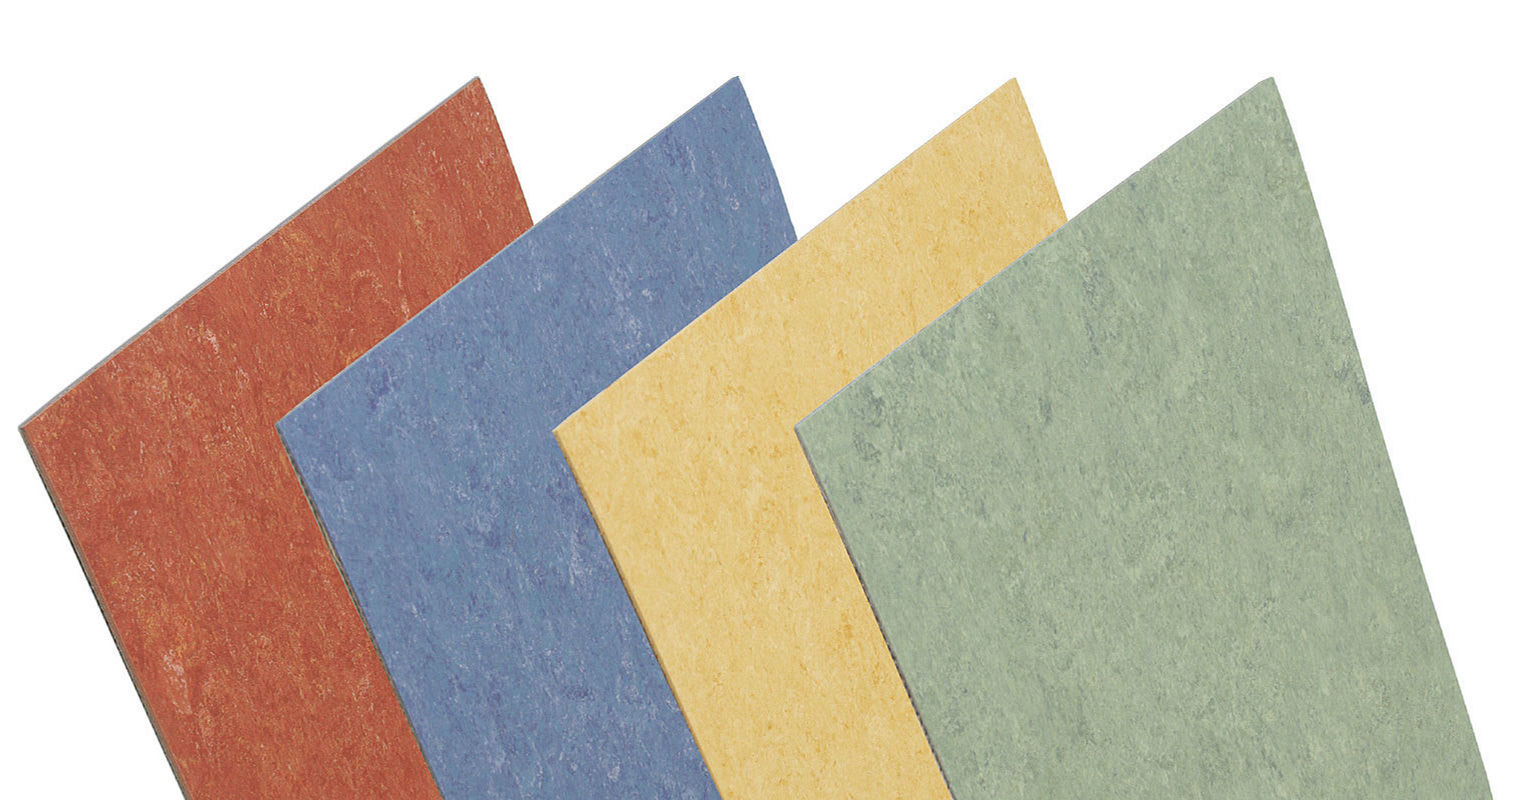 Linoleum tiles in different colors